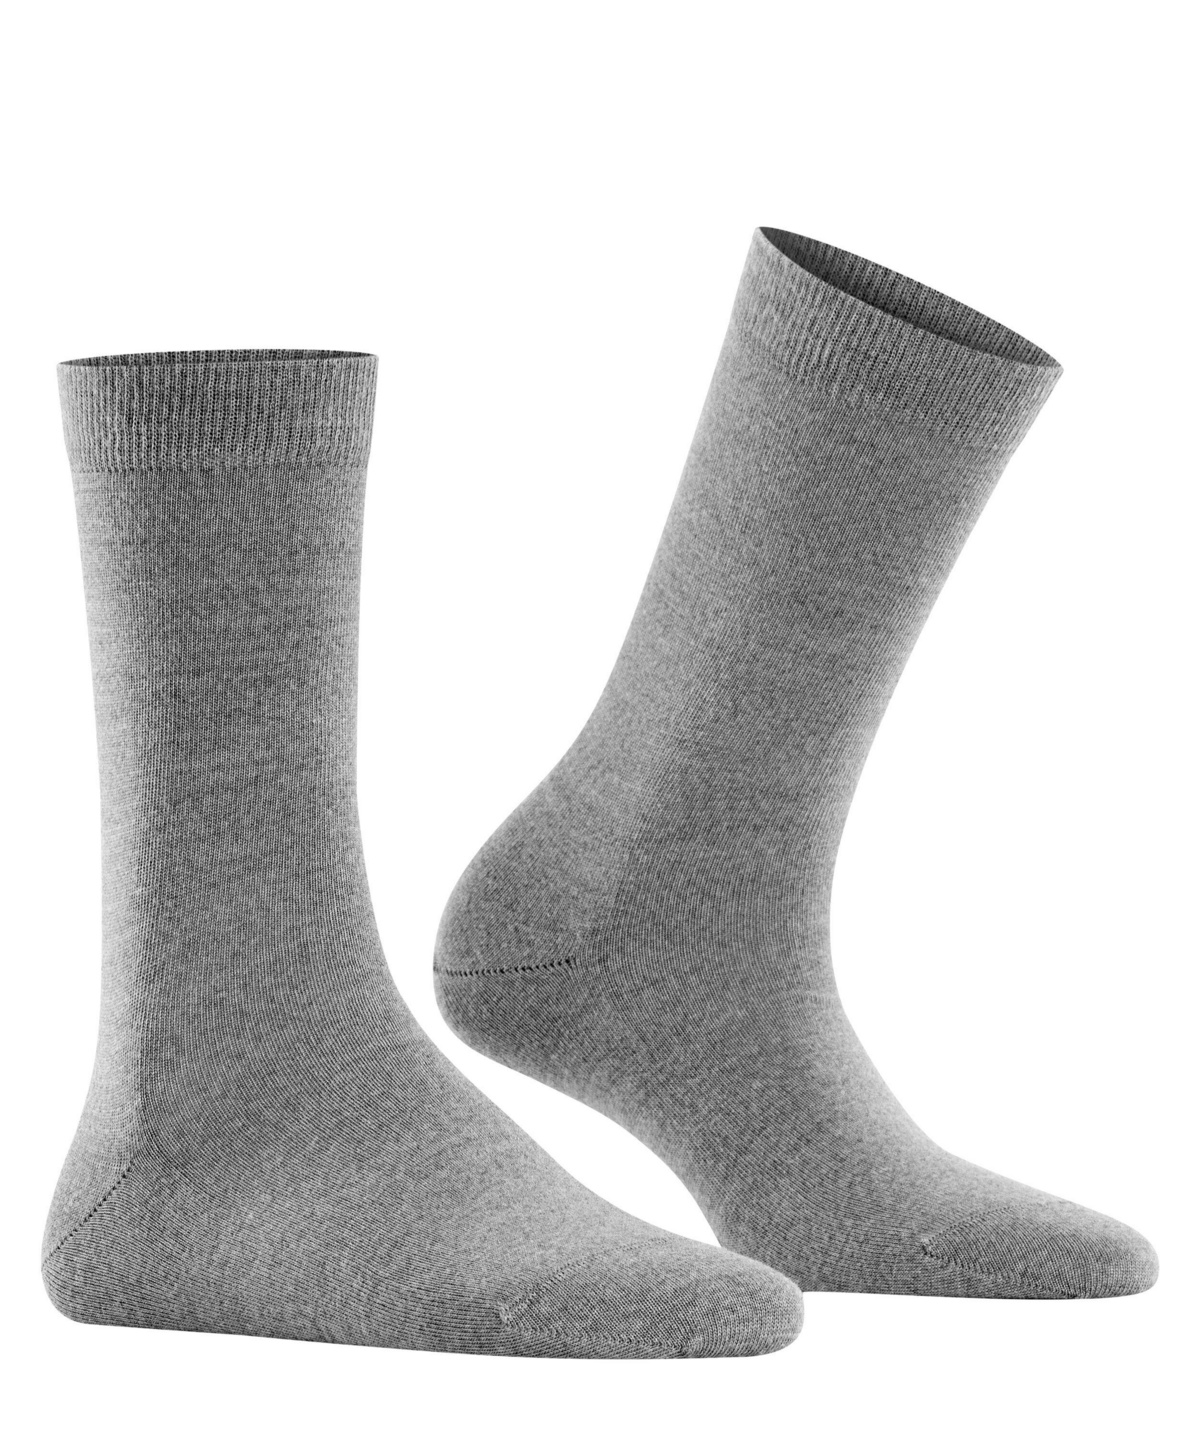 Softmerino Sock-1 pair-57% Virgin Wool 23% Cotton 18% Polyamide 2% Elastane- Warming sock-Cotton on Inside Against Skin 